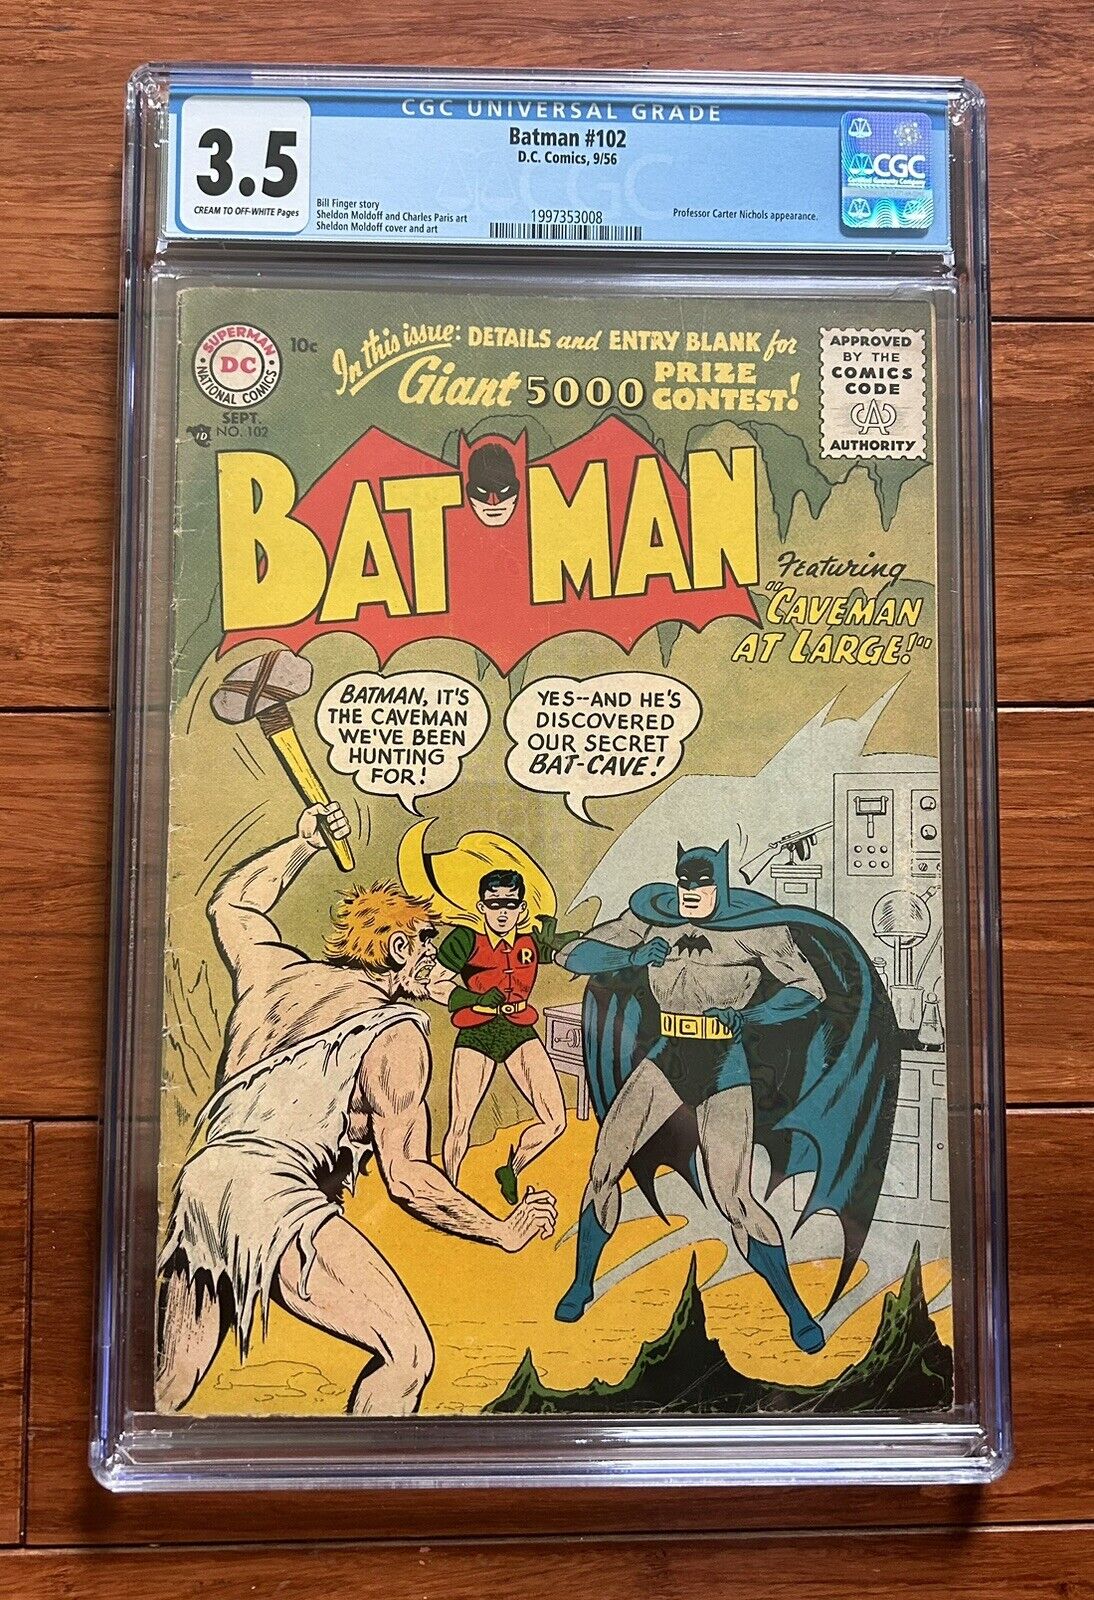 Batman Issue # 102 1956 CGC 3.5 (VG-), LAST Golden Age Issue